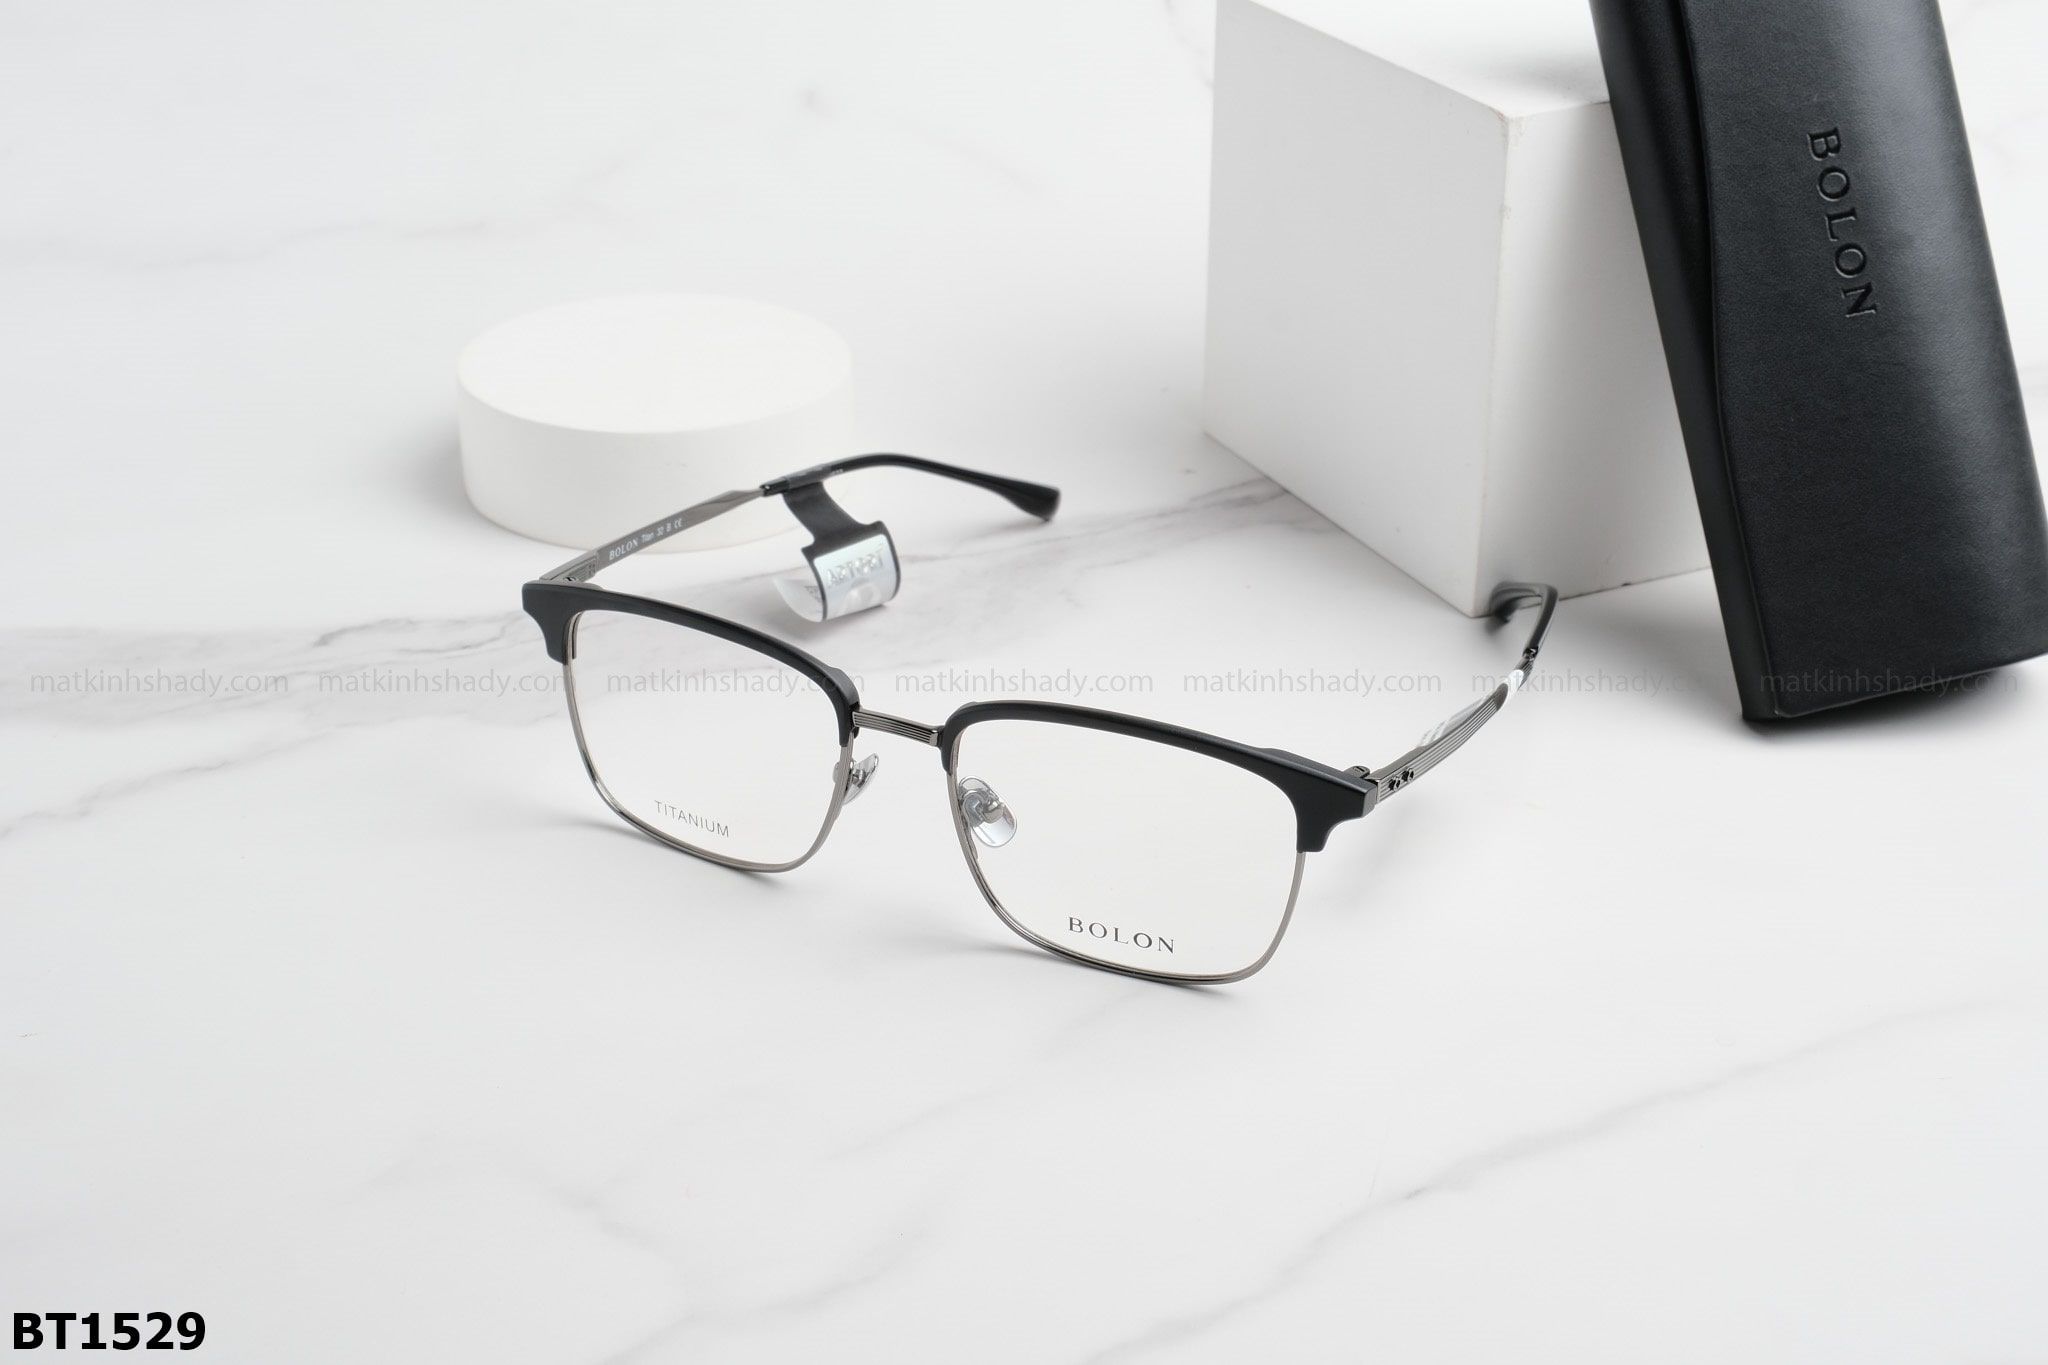  Bolon Eyewear - Glasses - BT1529 